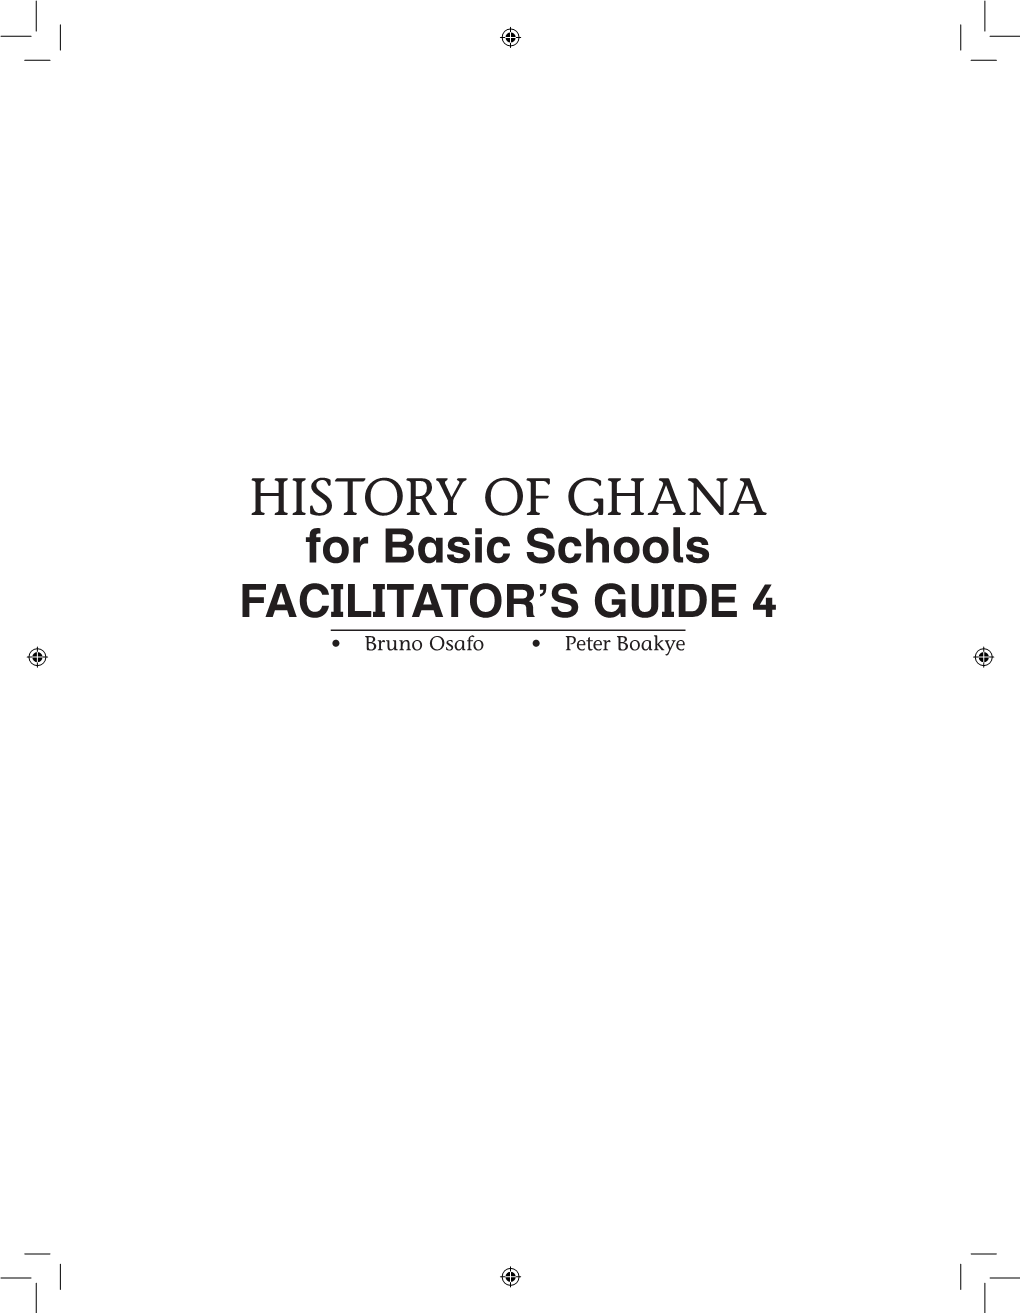 Primary 4 History of Ghana Facilitator's Guide